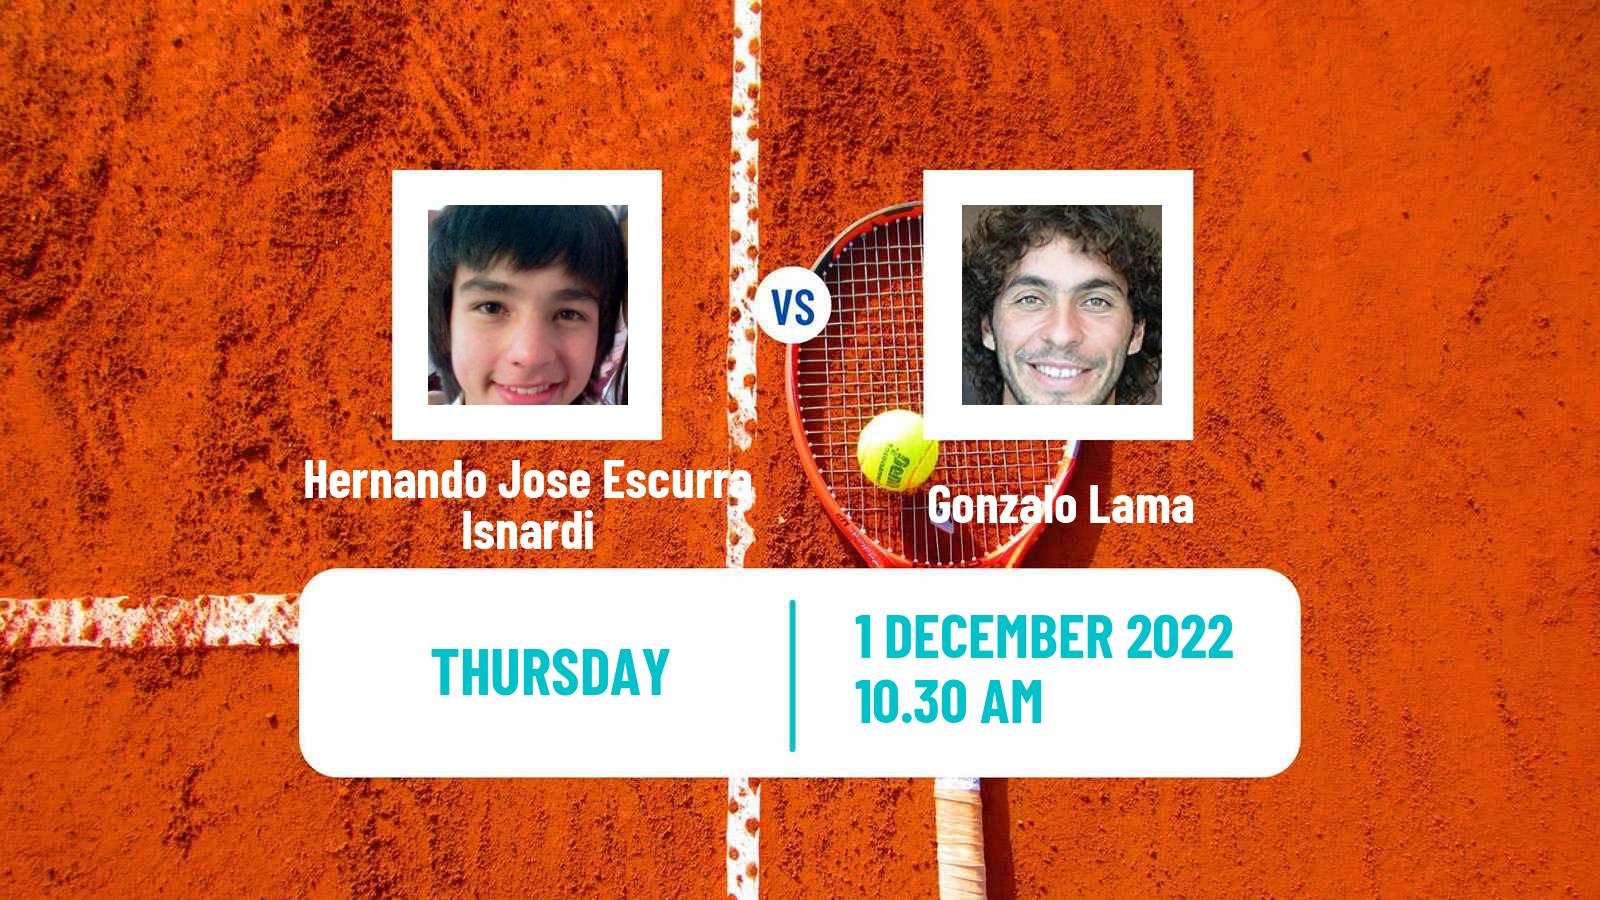 Tennis ITF Tournaments Hernando Jose Escurra Isnardi - Gonzalo Lama